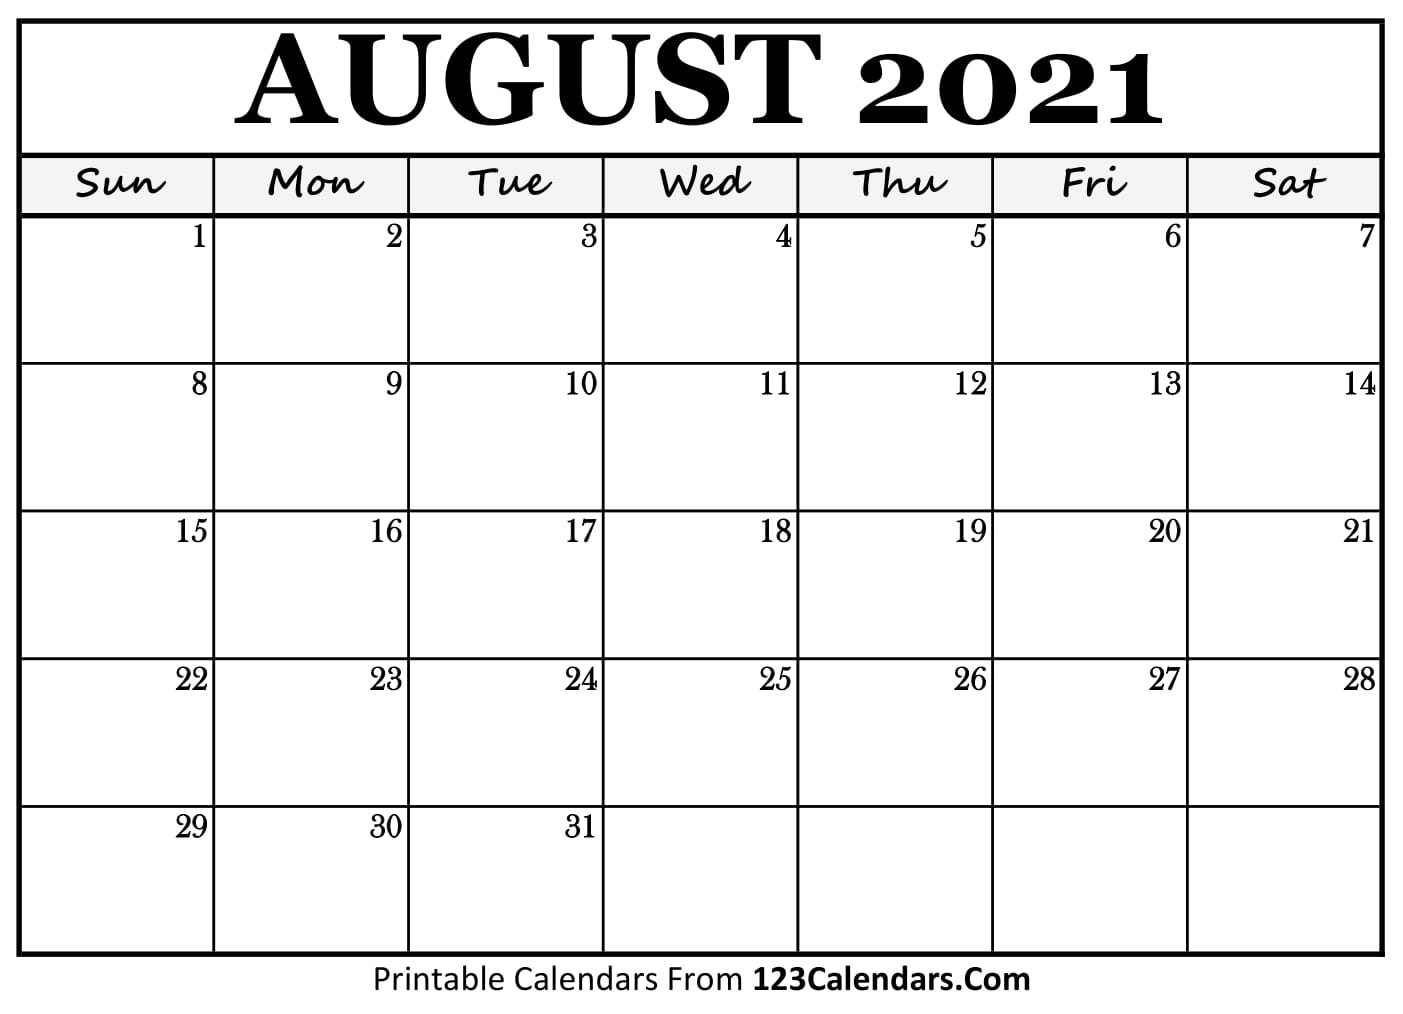 Printable August 2021 Calendar Templates - 123Calendars-Free Printable Calendar For August --December 2021